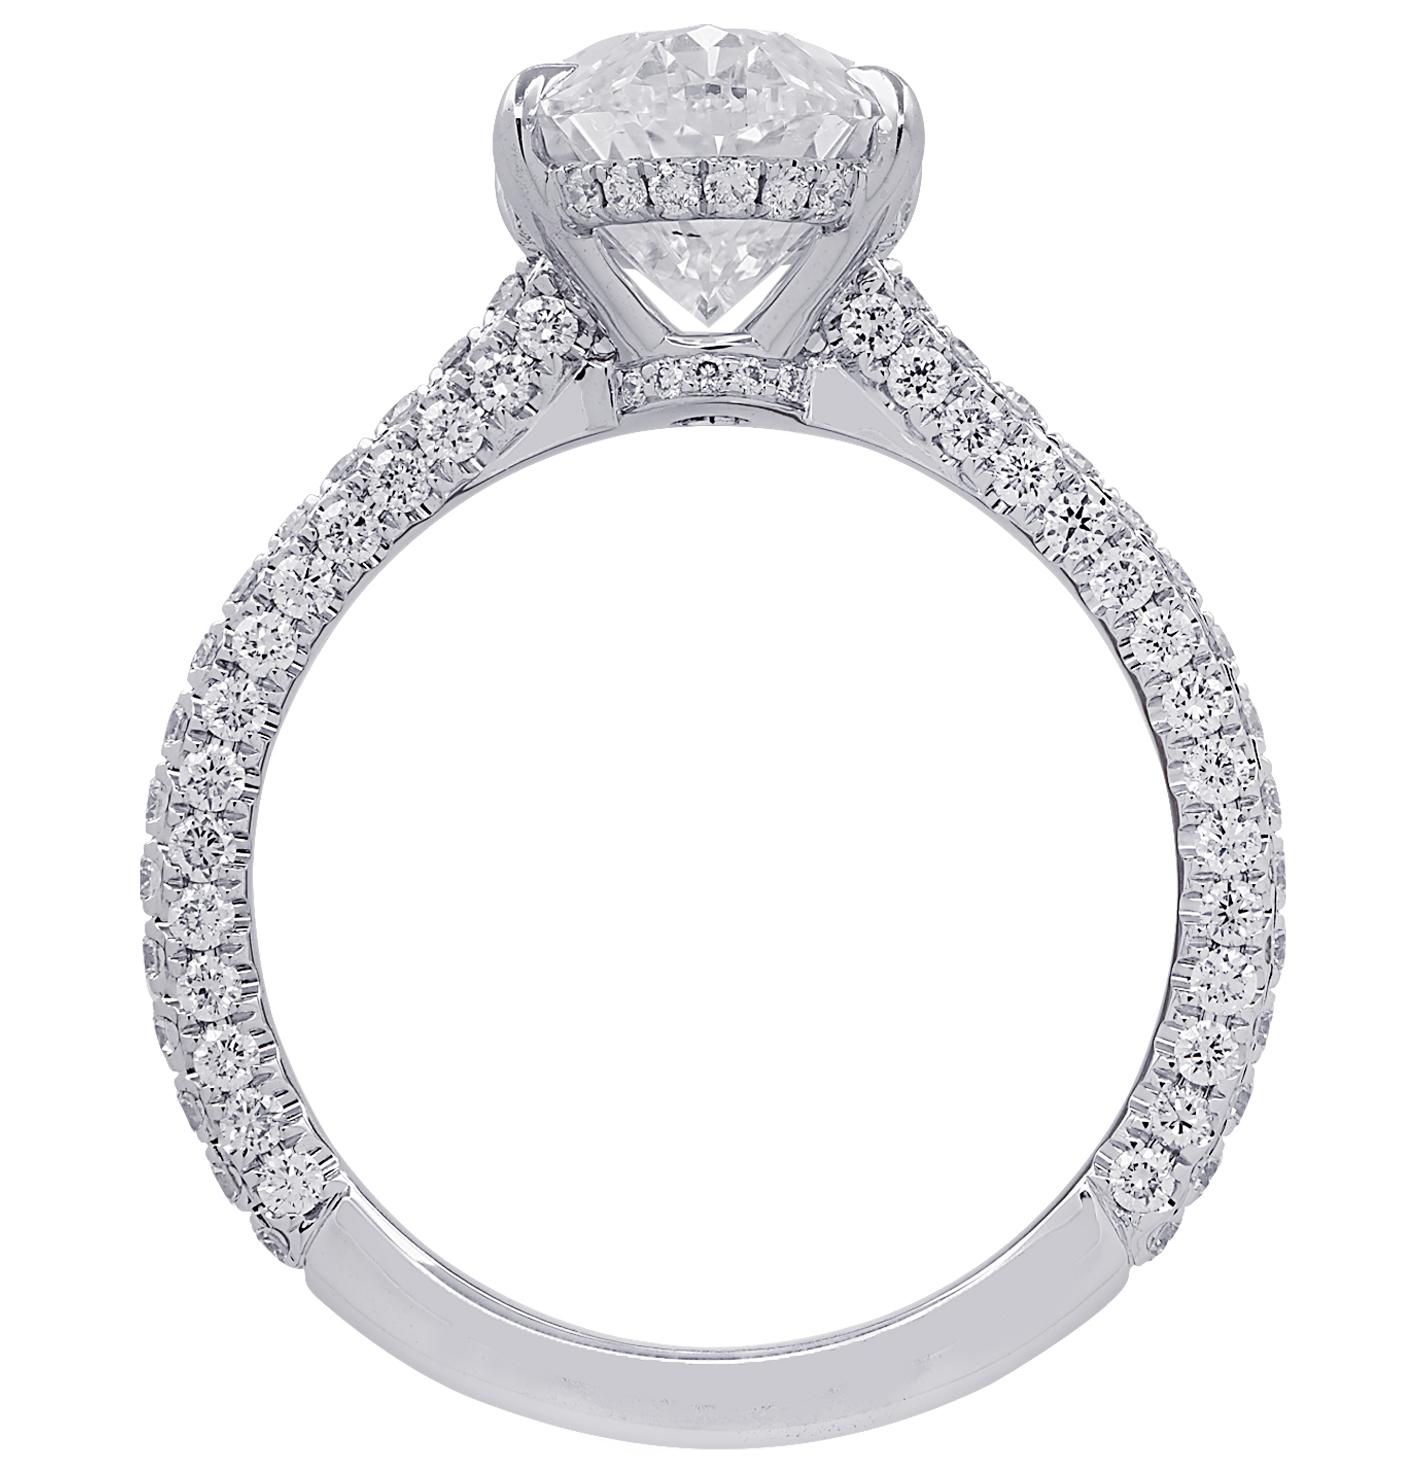 Oval Cut Vivid Diamonds GIA Certified 3.28 Carat Diamond Engagement Ring